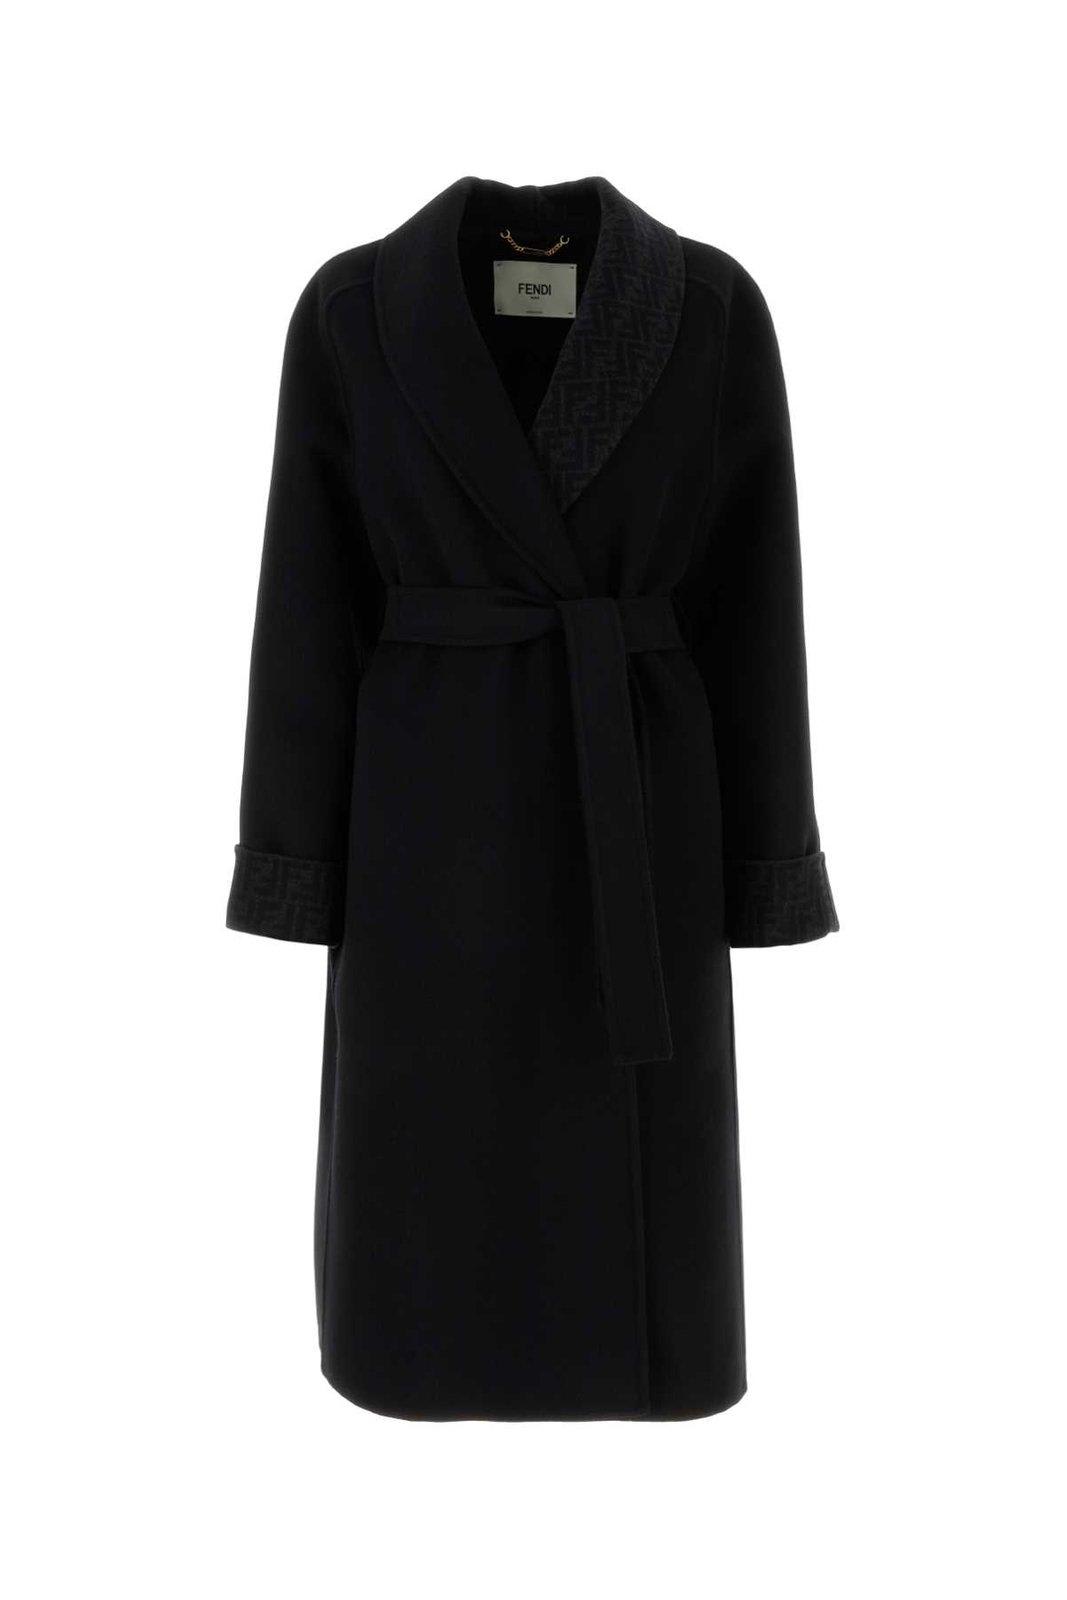 Fendi Robe-style Midi Coat